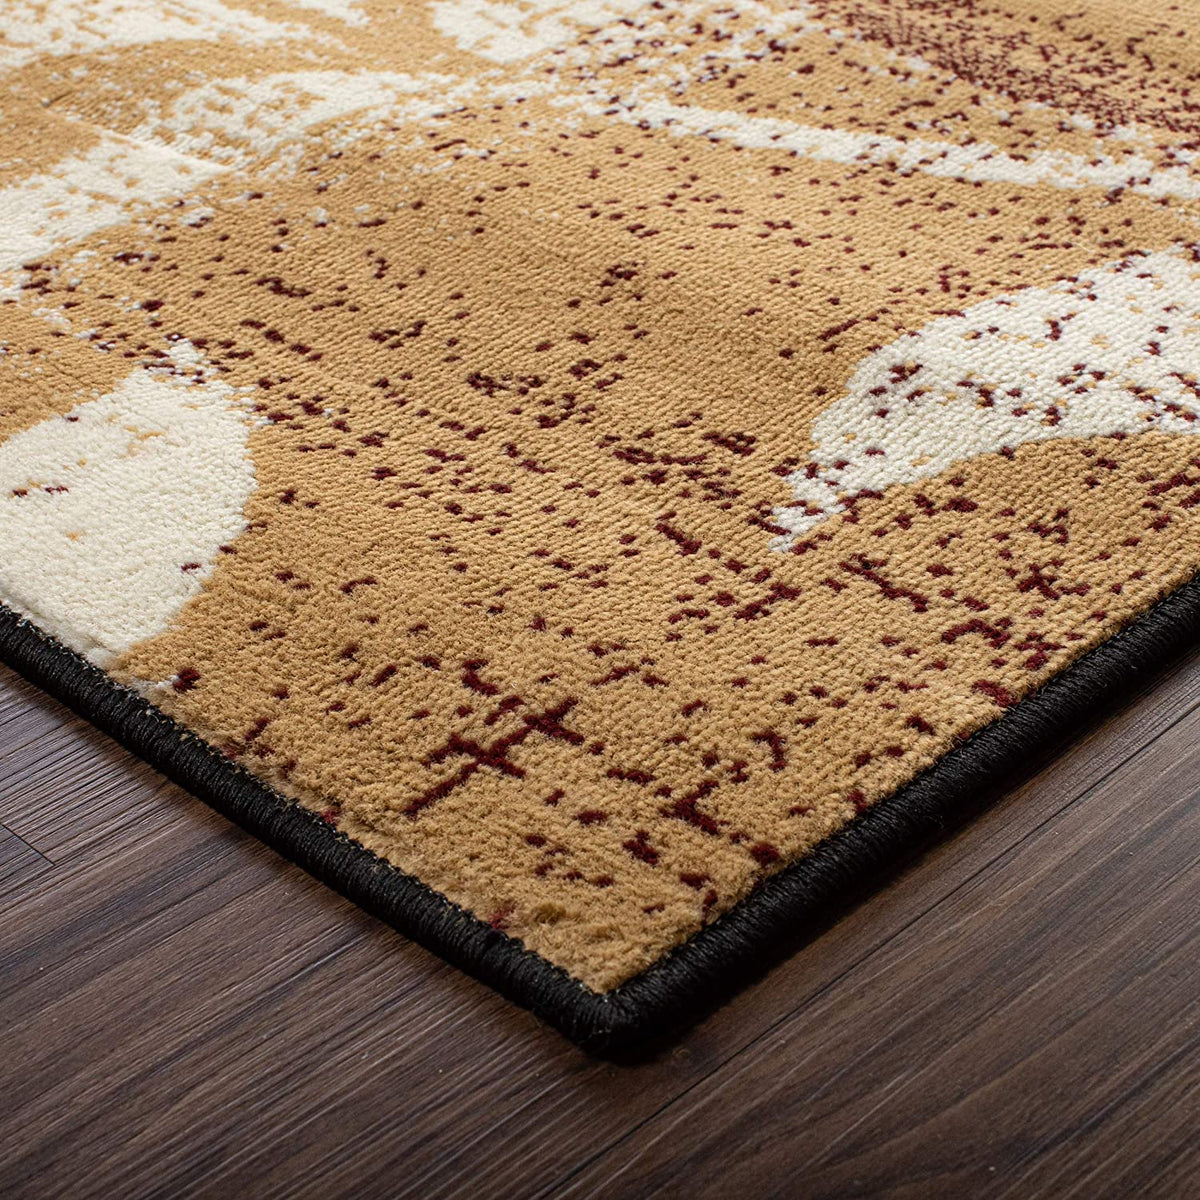 Area rug Newprt #52 Modern burgundy gray soft pile size option 2x3